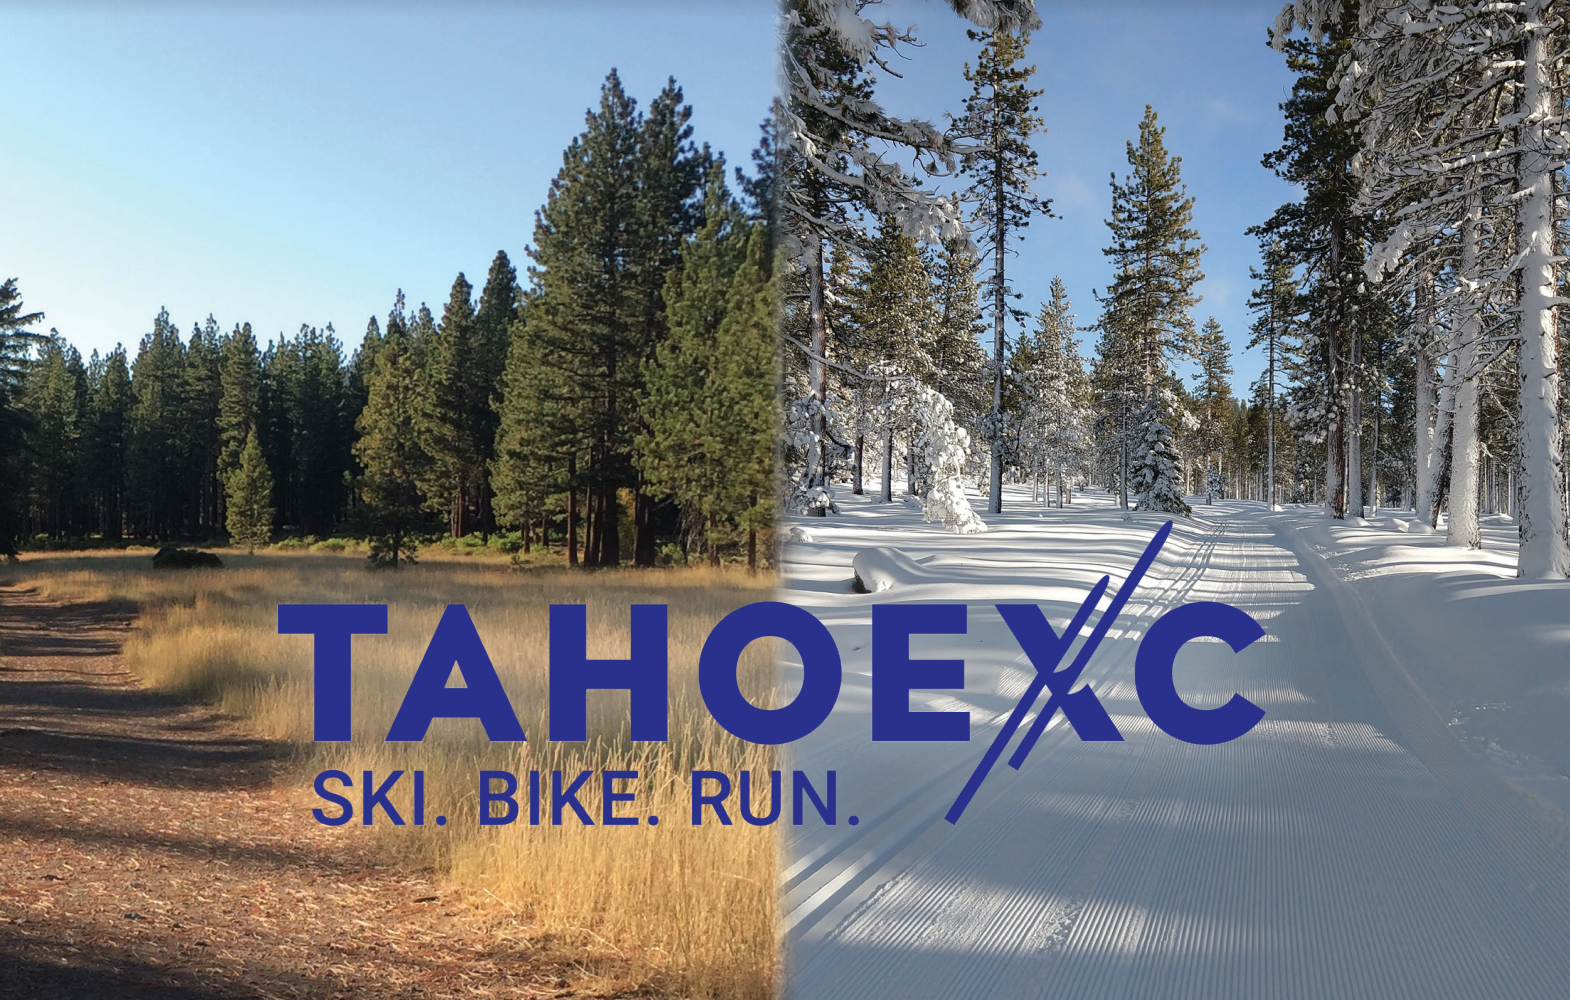 Year Round Trail Use @ Tahoe XC